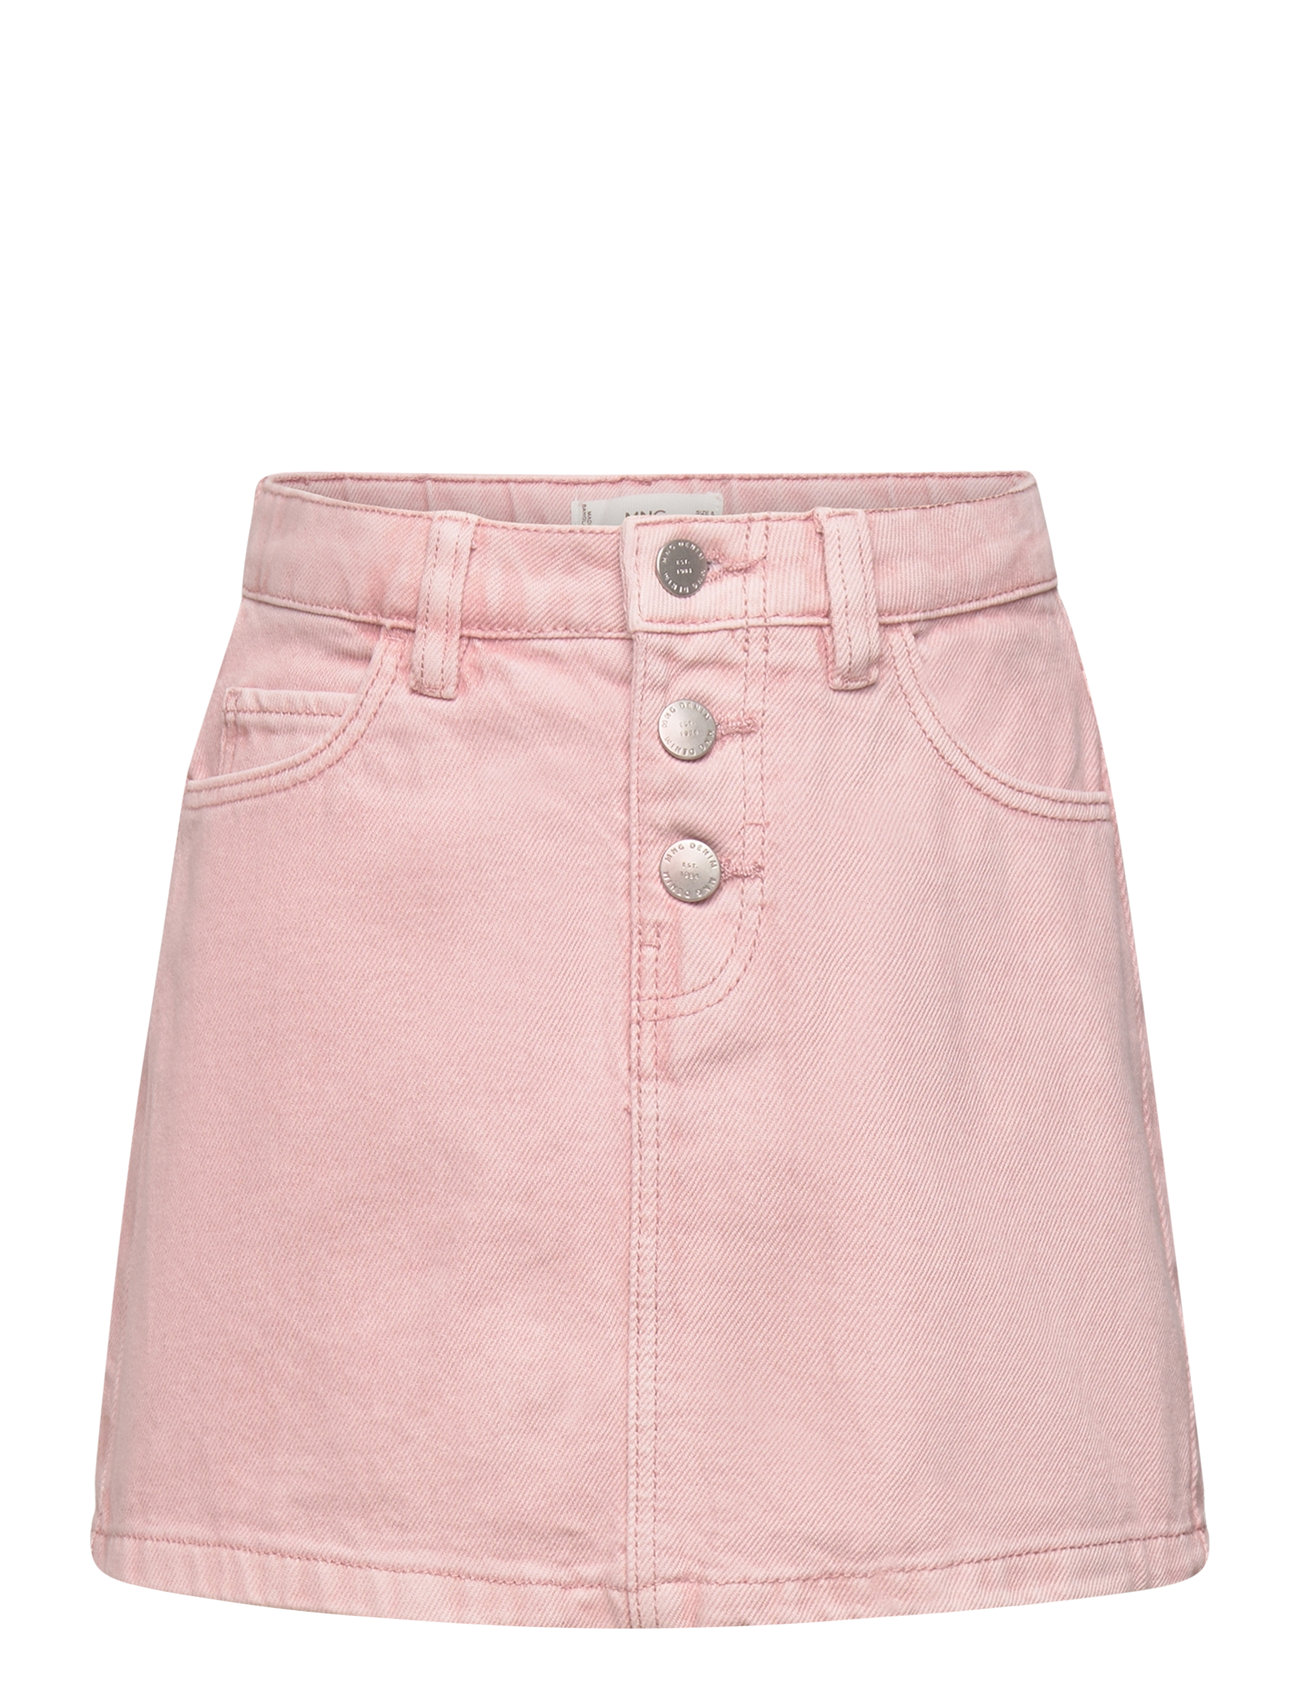 Denim Skirt With Buttons Dresses & Skirts Skirts Denim Skirts Pink Mango